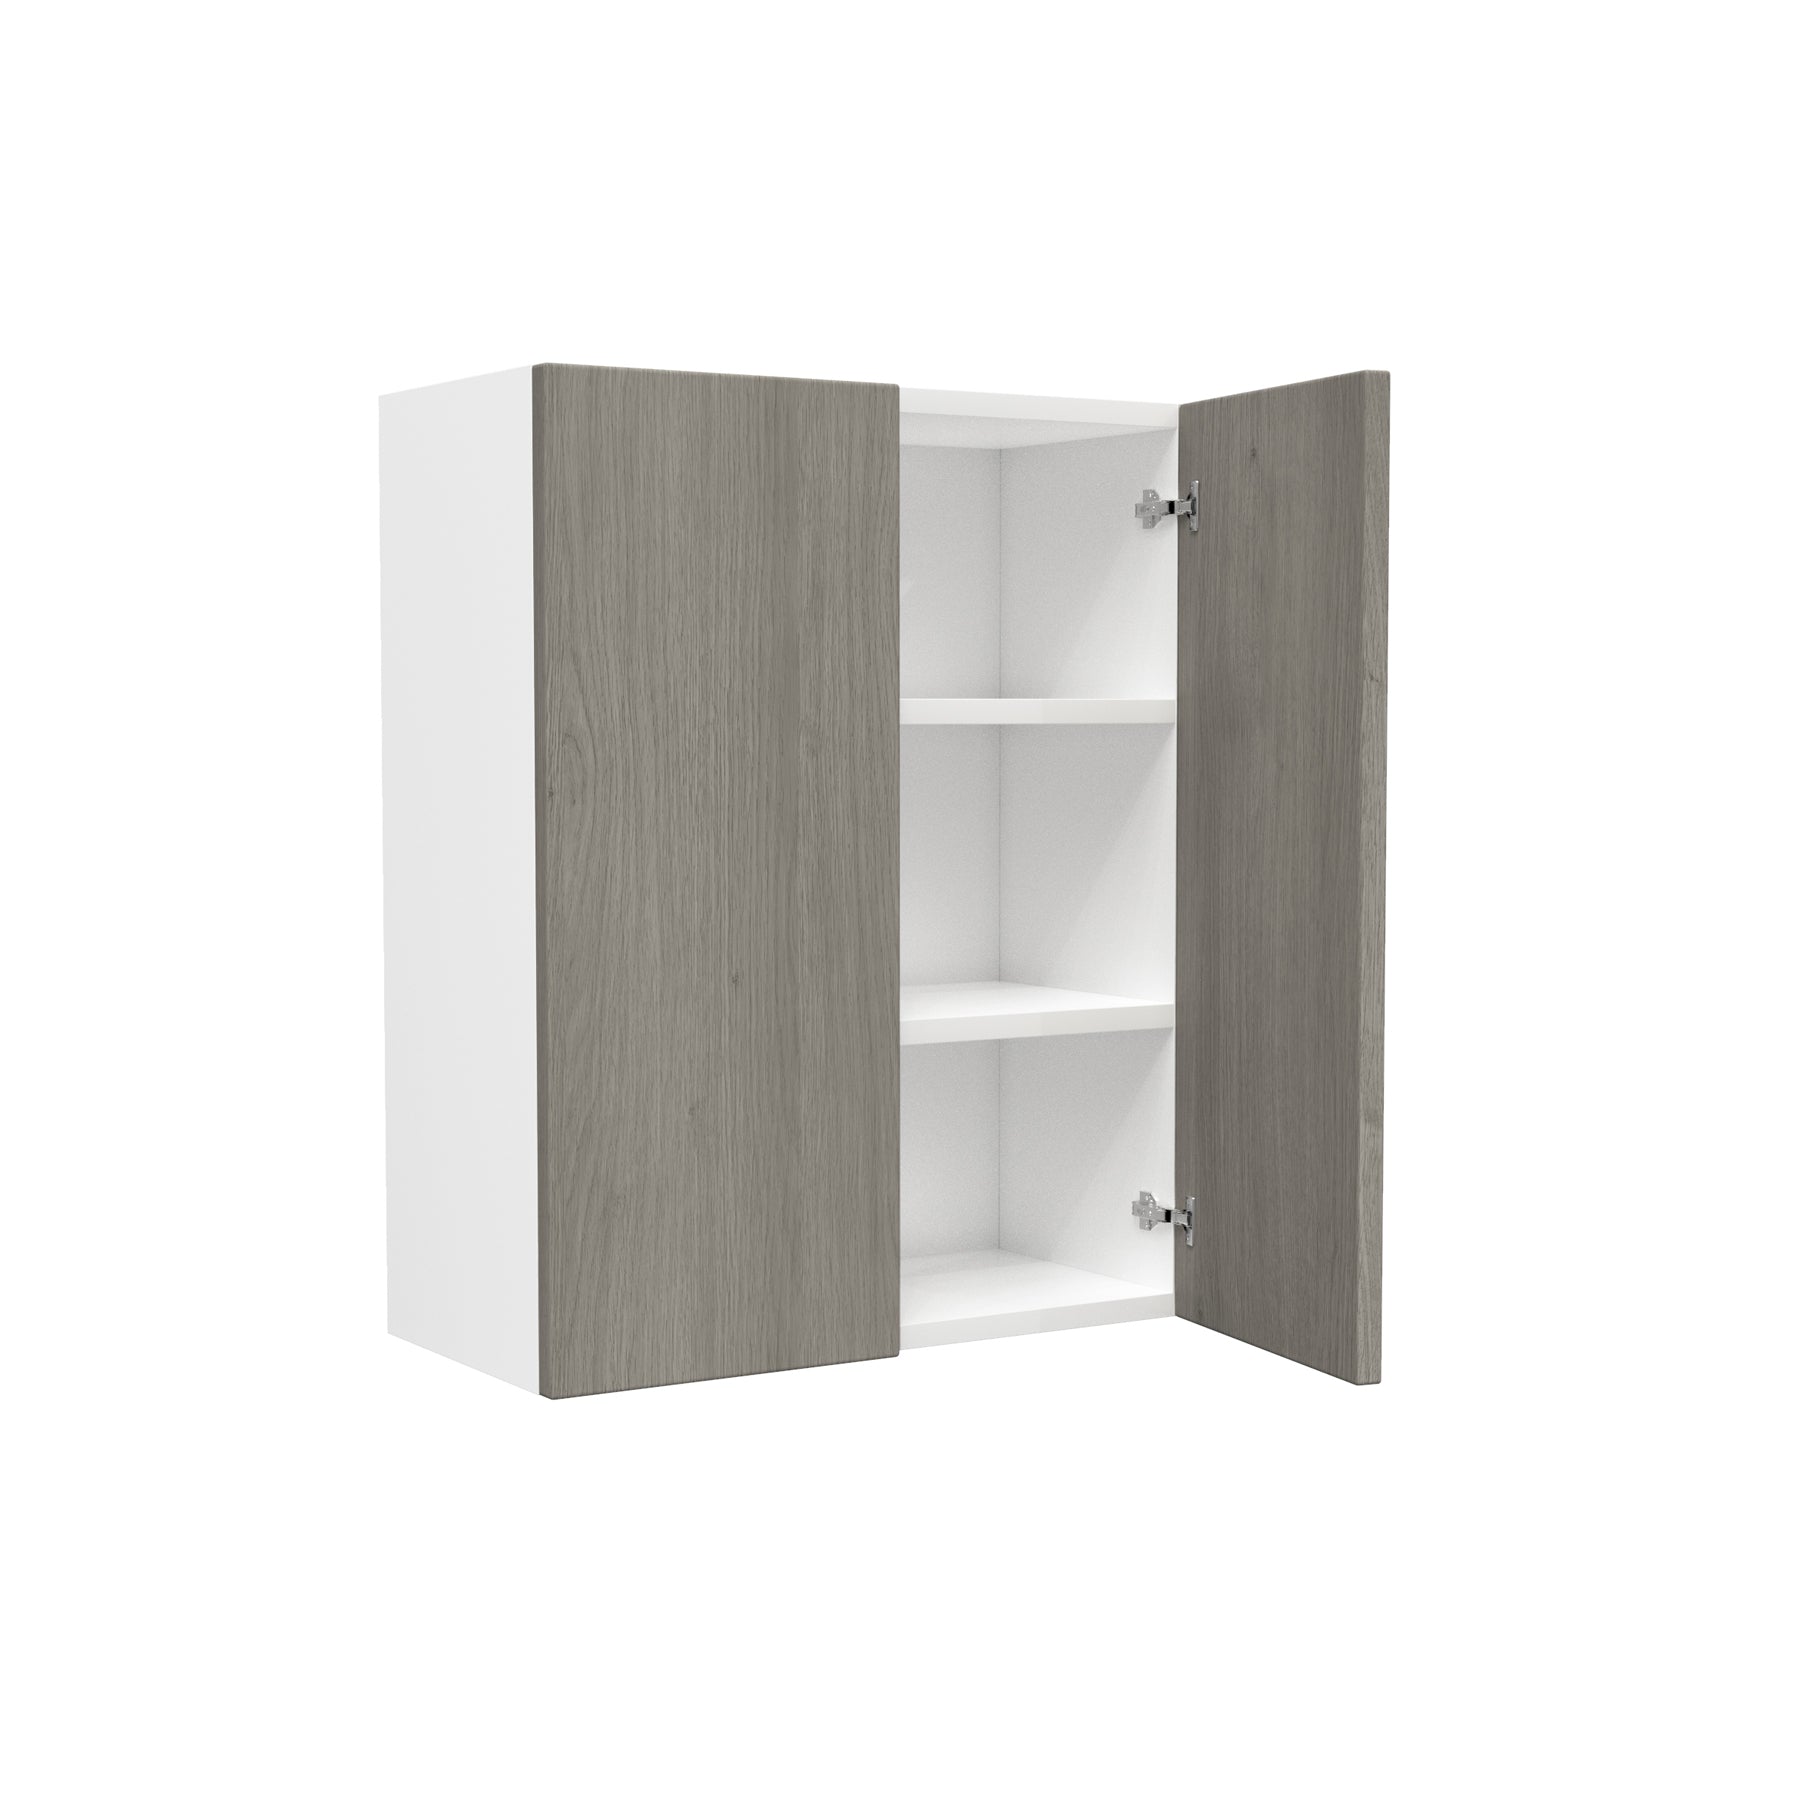 2 Door Wall Cabinet| Matrix Silver | 24W x 30H x 12D